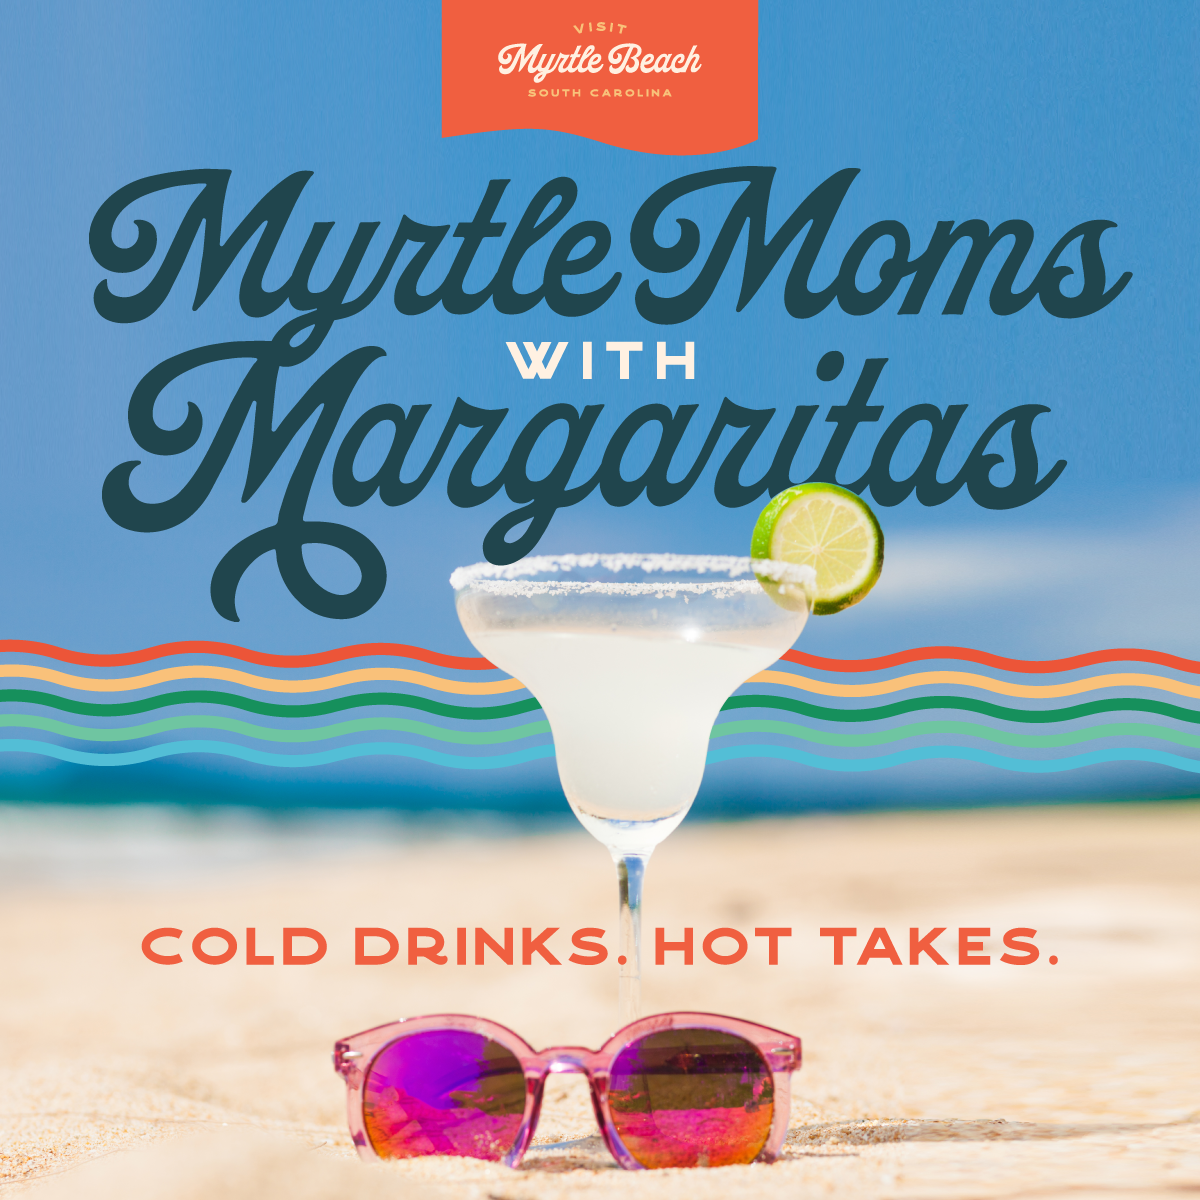 Myrtle Moms with Margaritas